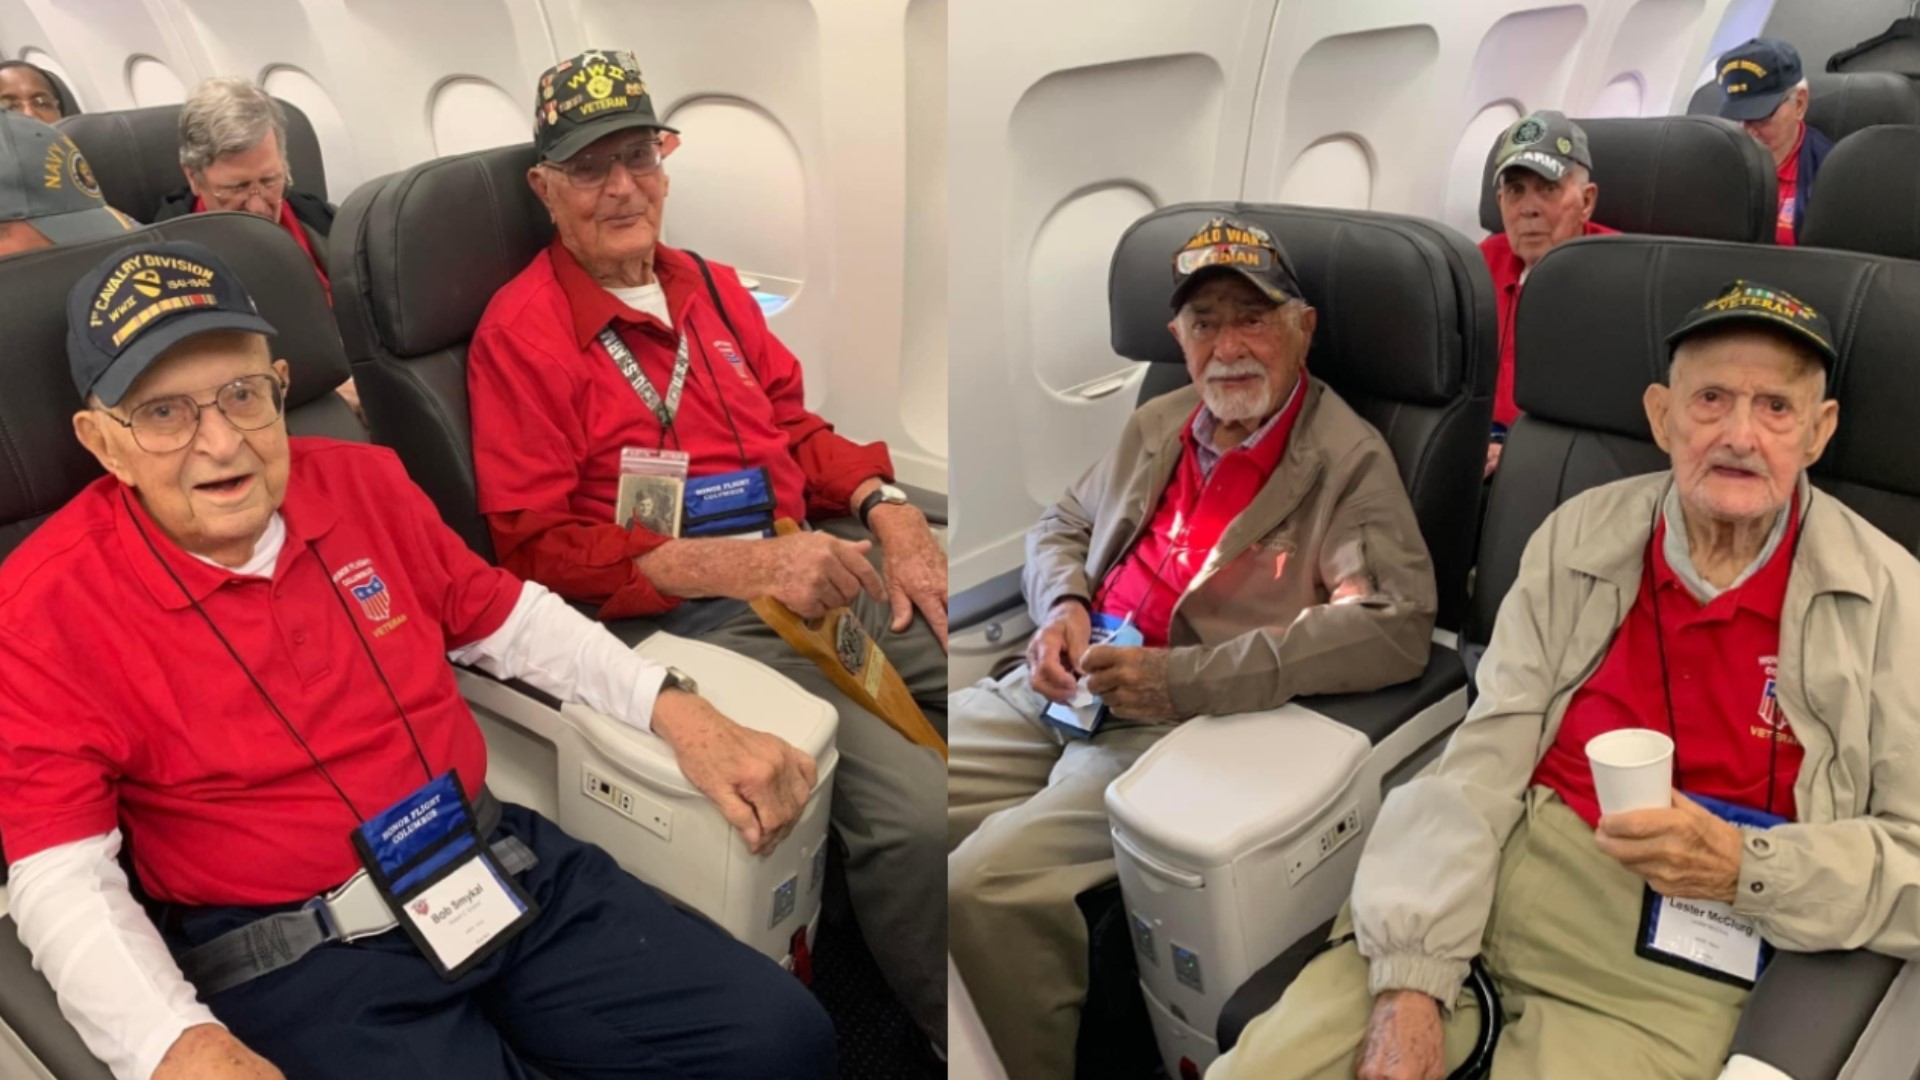 On board Thursday’s flight were WWII veterans Stanley Maybruck, Bob Smykal, Lester McClurg and Bob Morris.